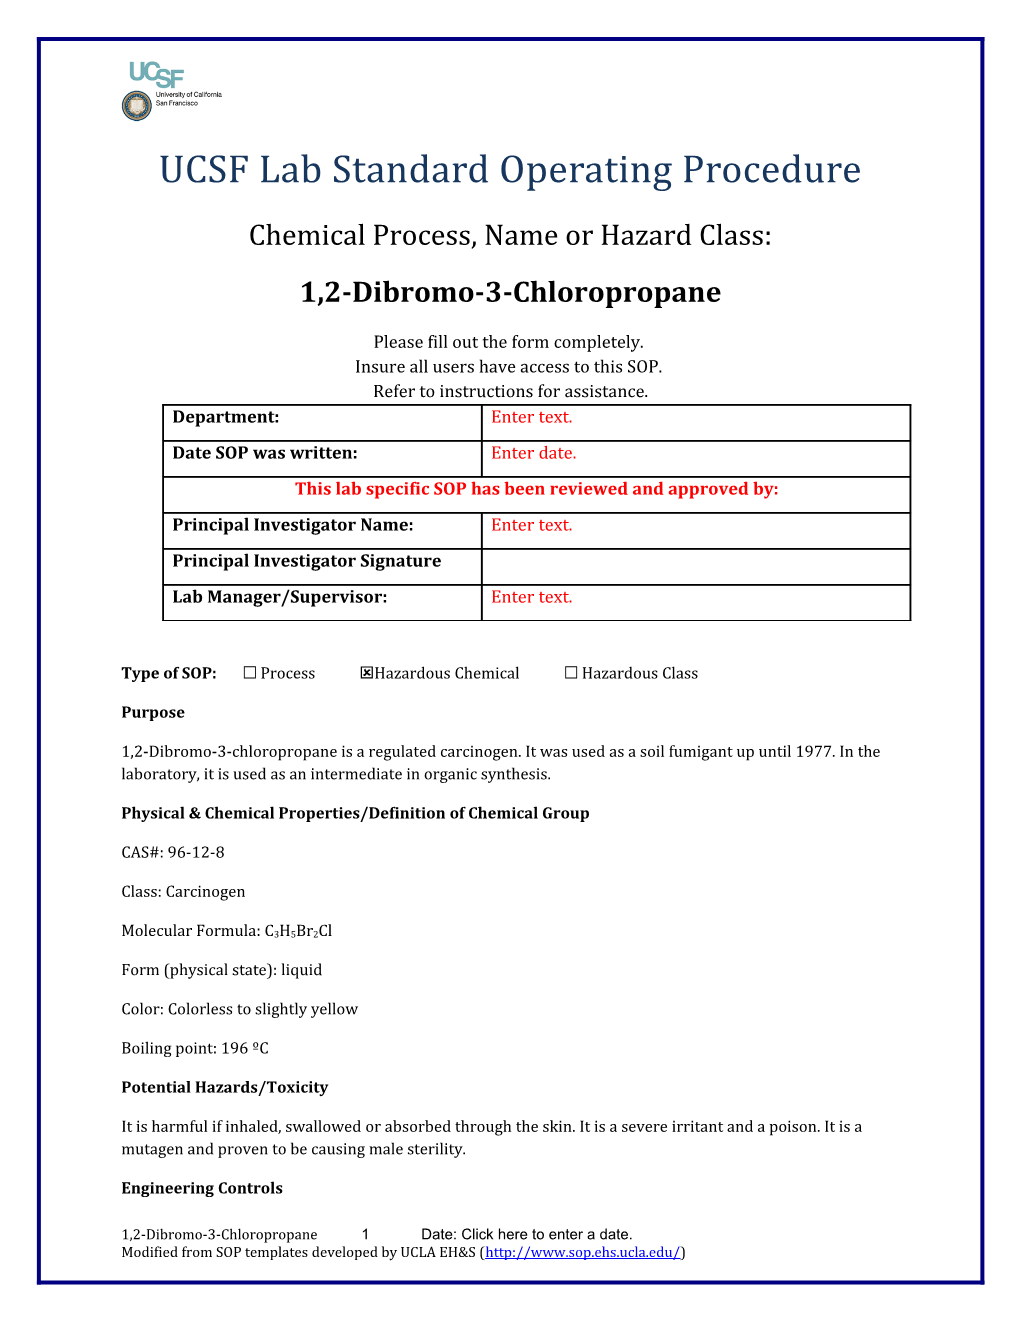 UCSF Lab Standard Operating Procedure s11